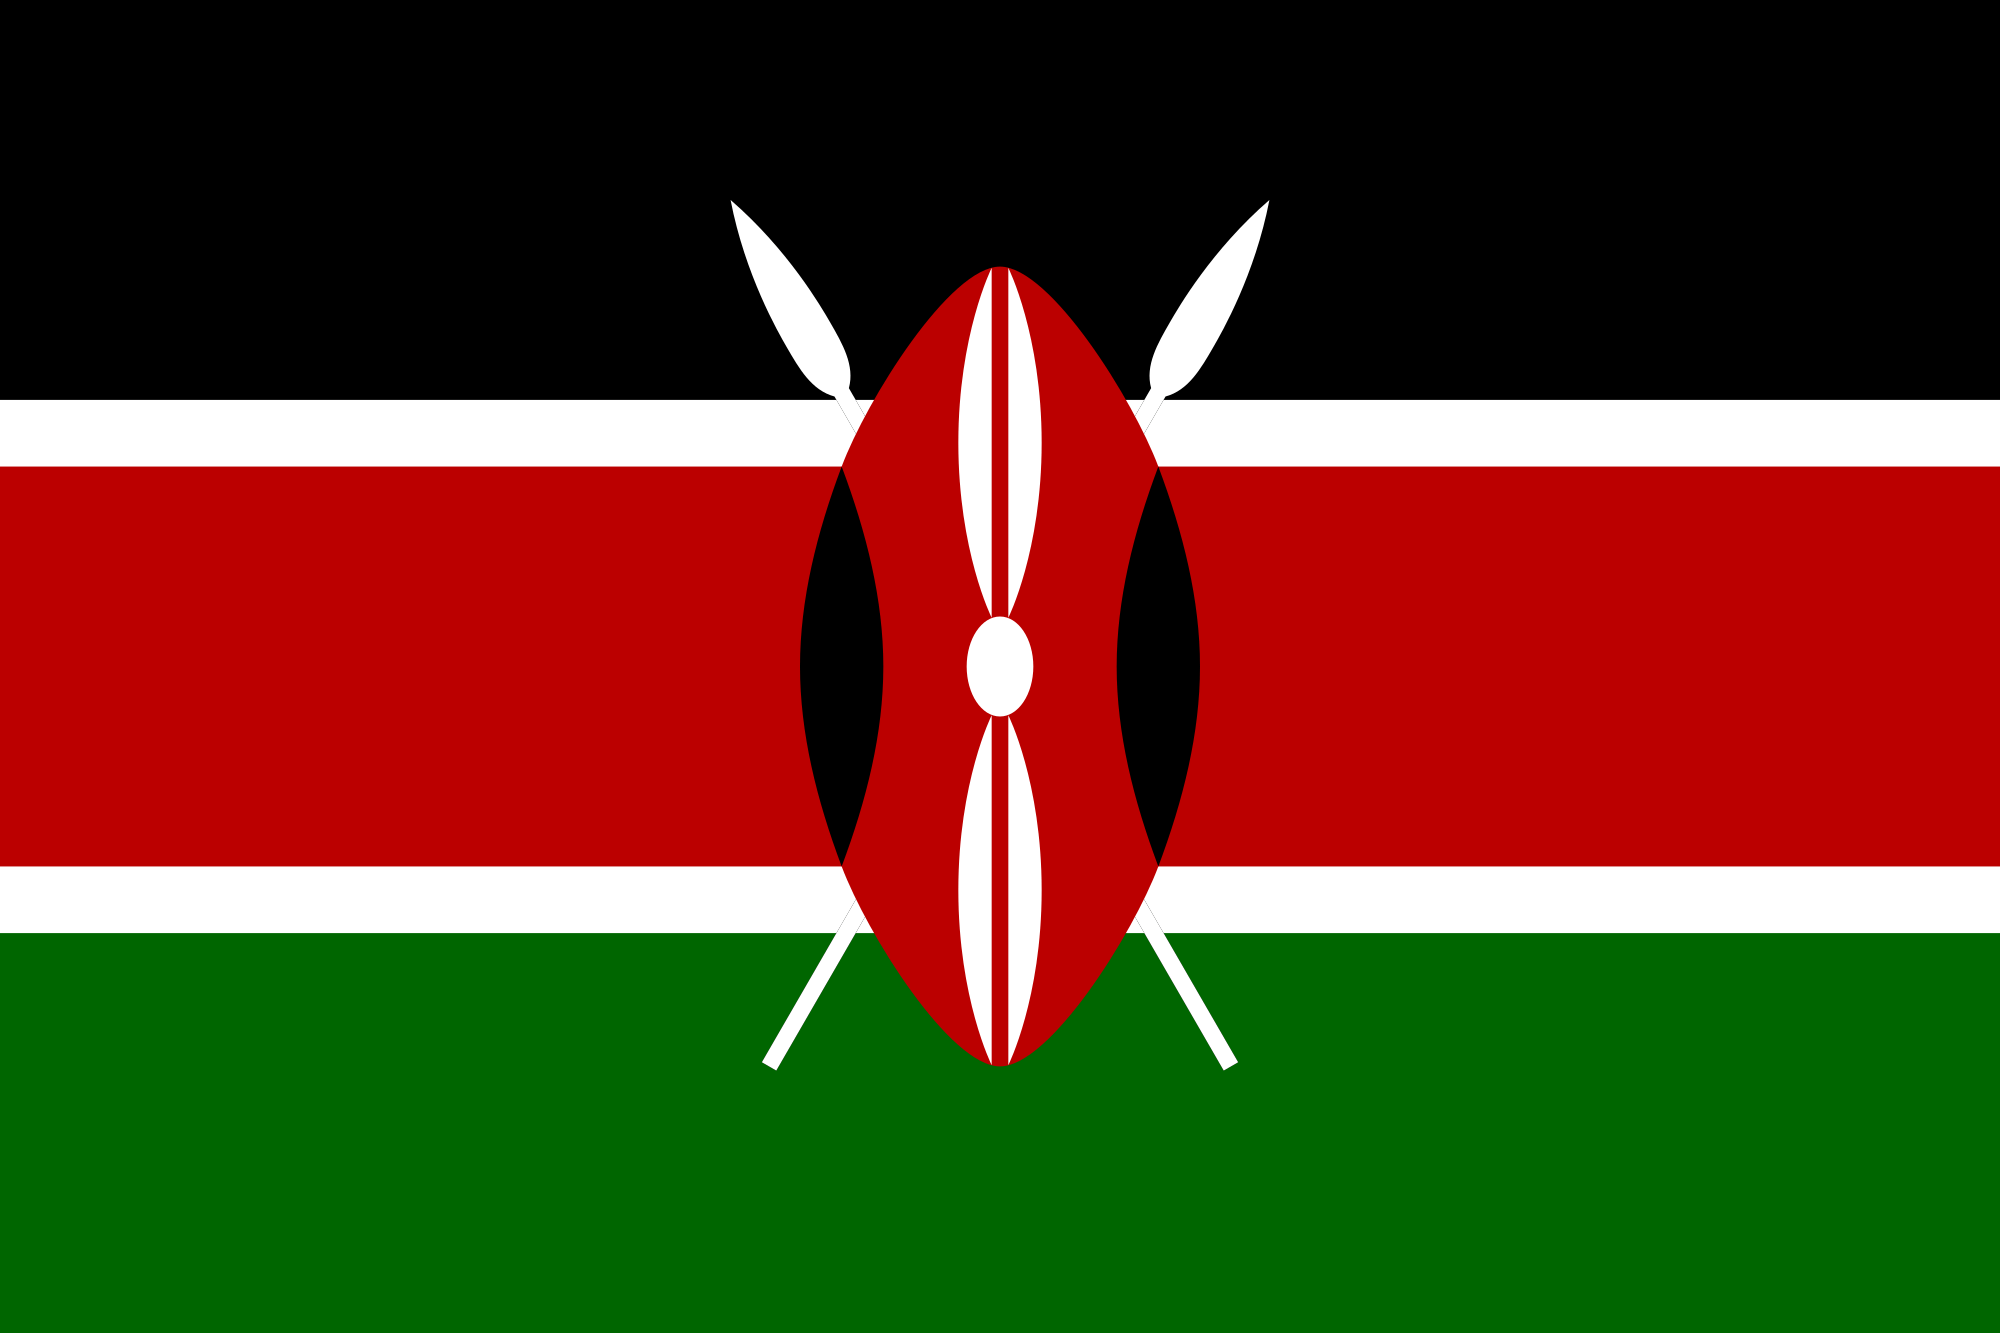 Black Red and Green Logo - Kenya Flag of Colors, Flag Etiquette, Design and History